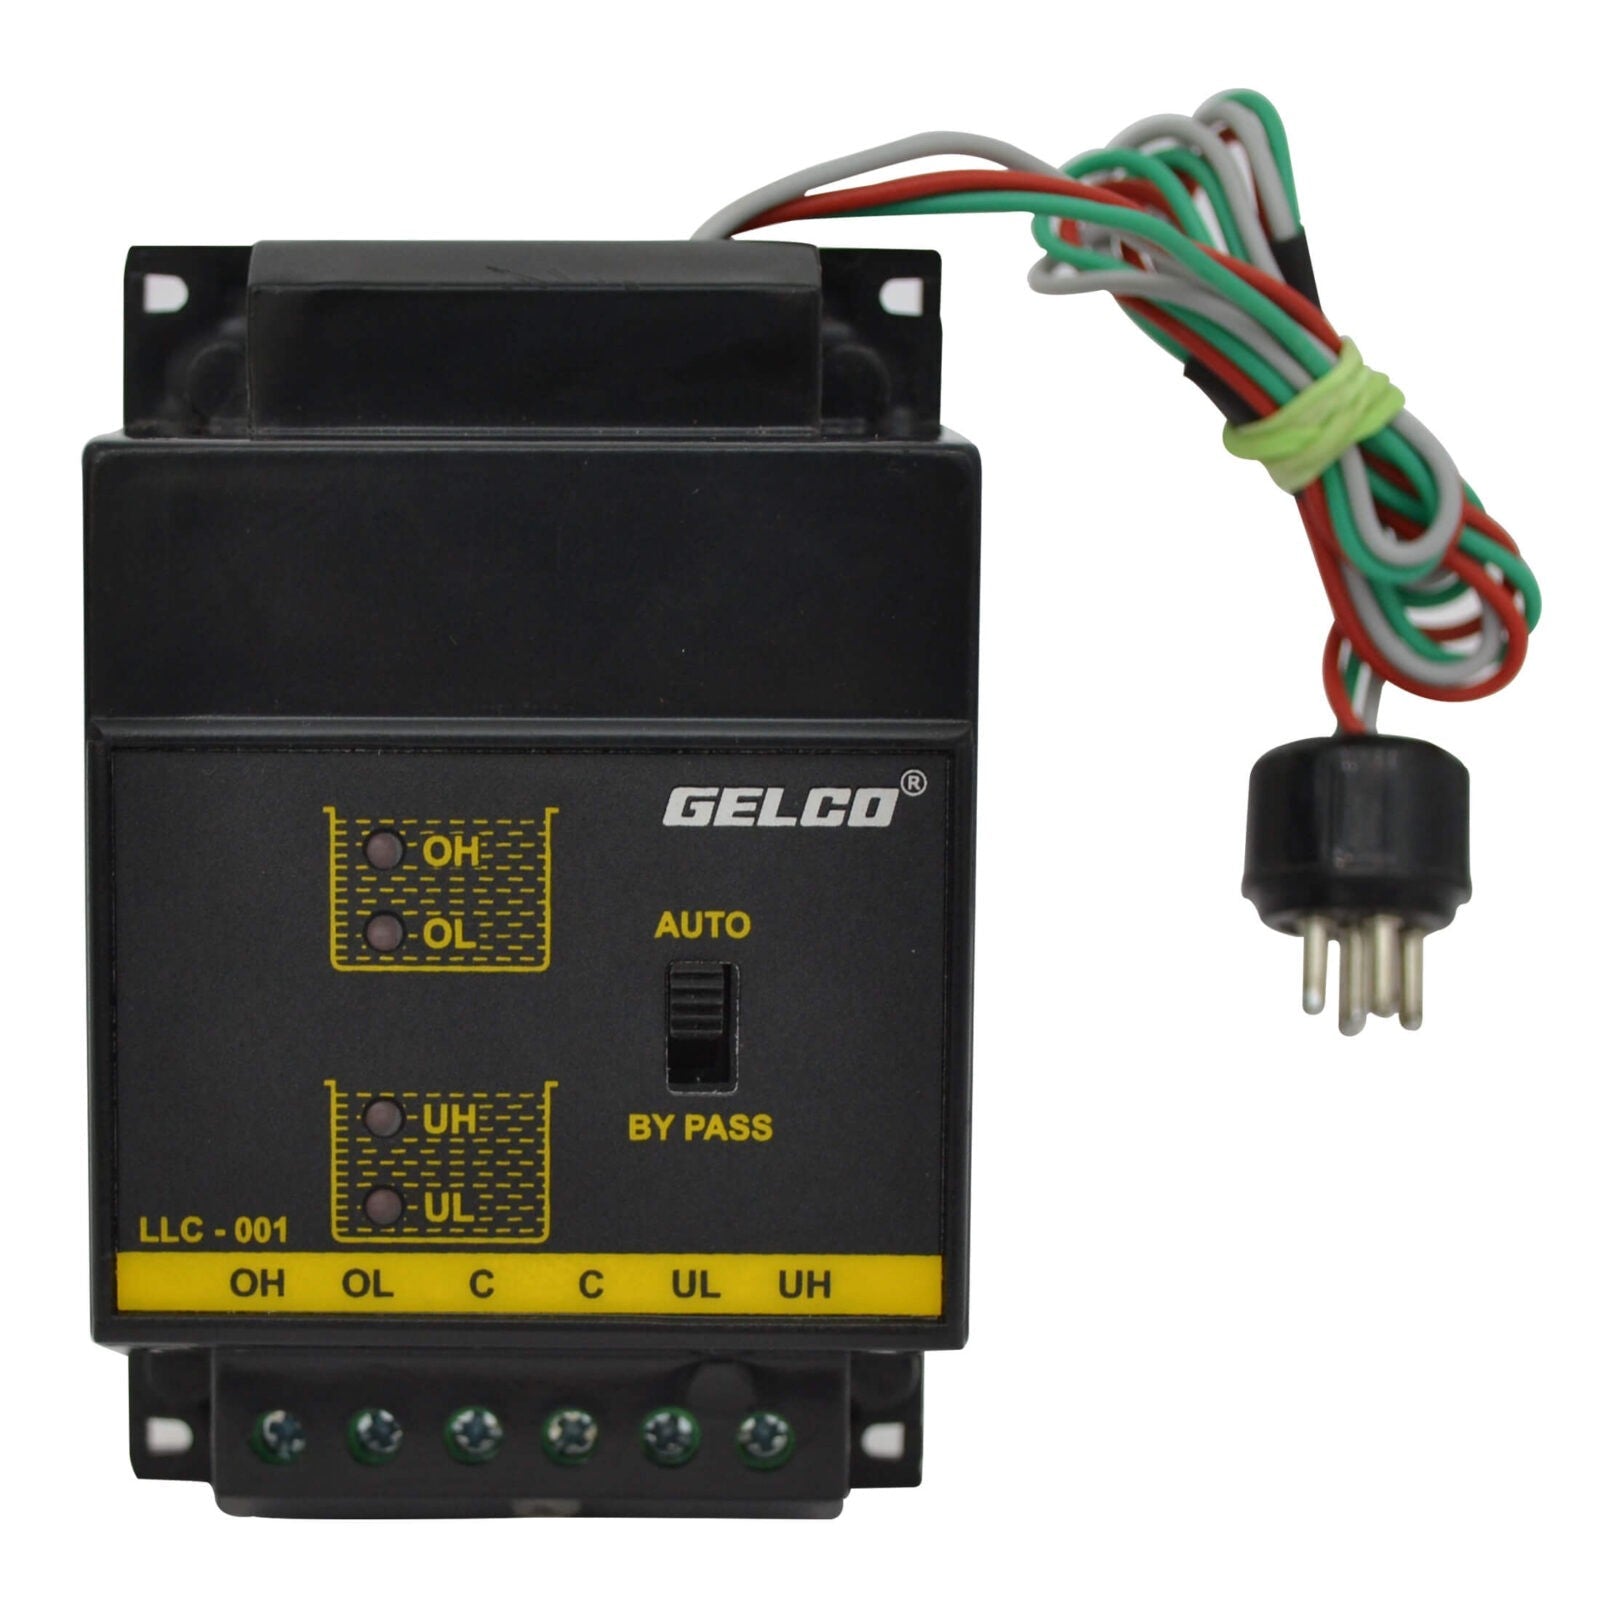 LLC-001, Water Level Controller - Gelco Electronics Pvt. Ltd.